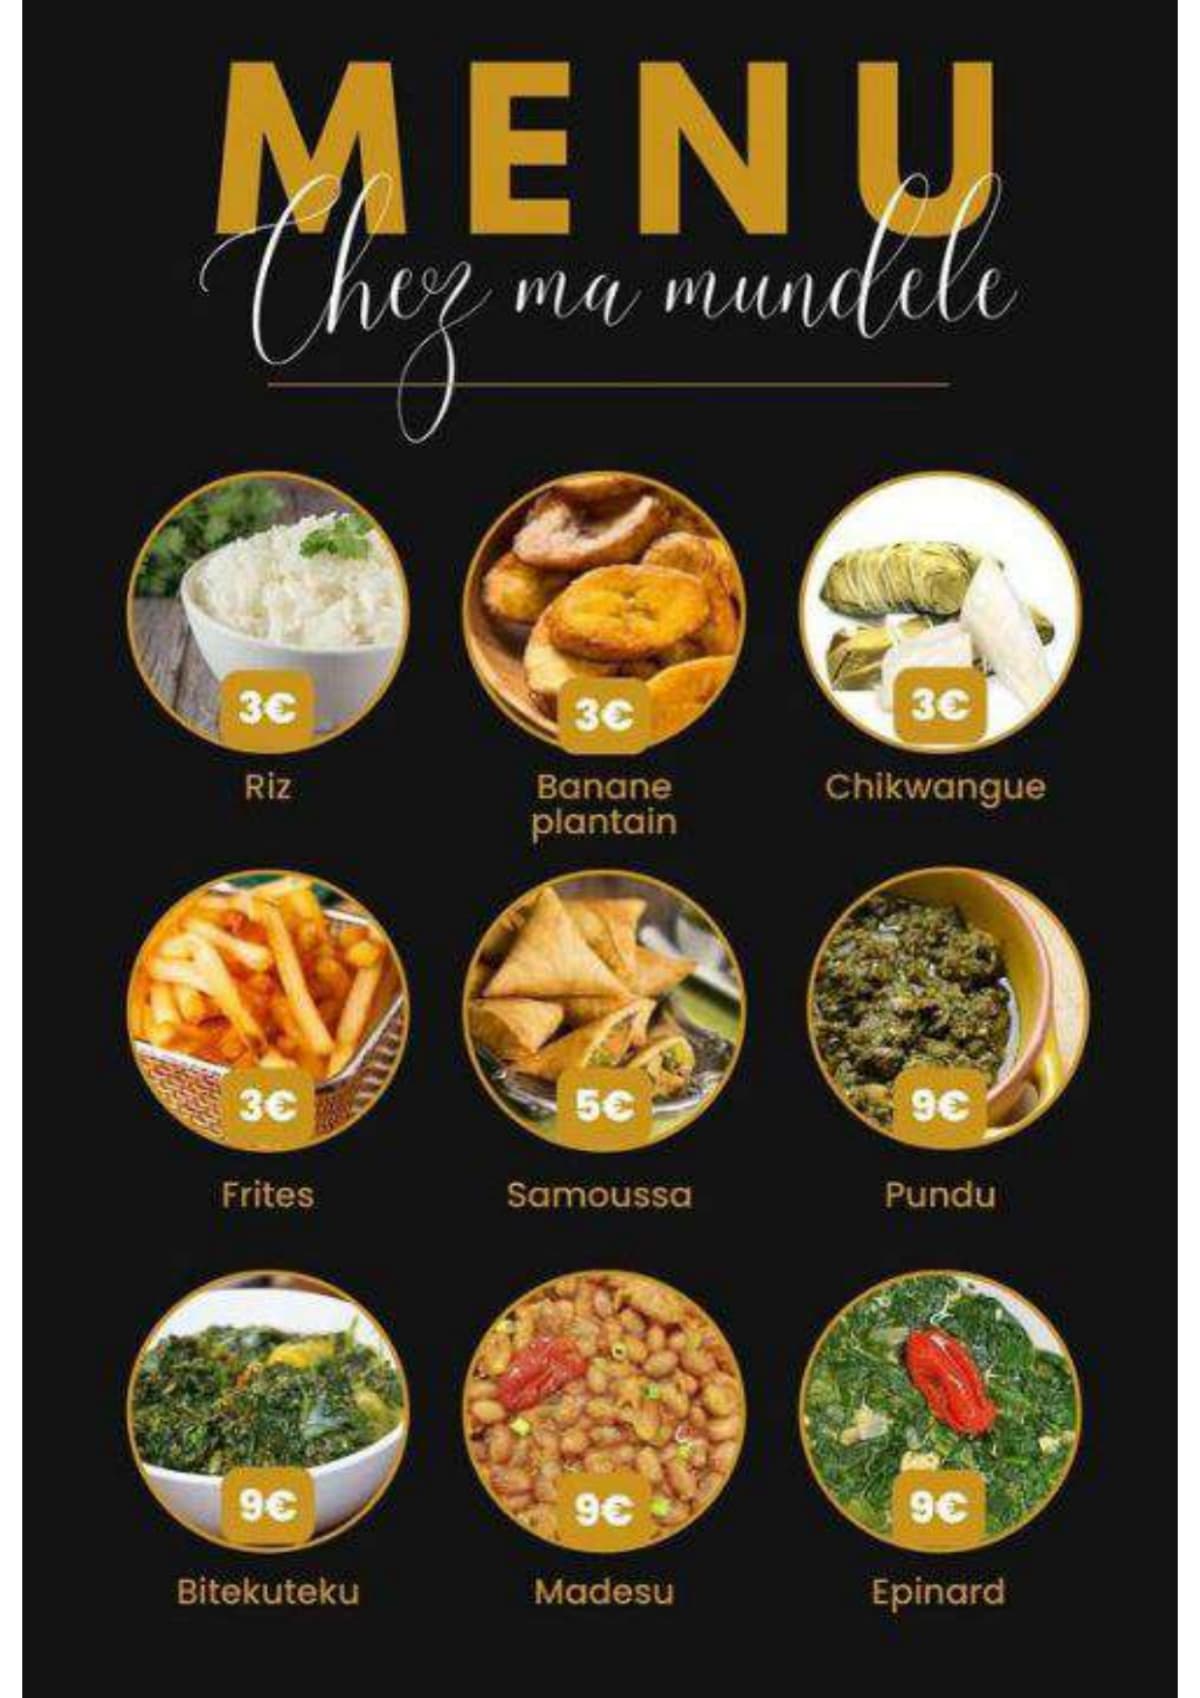 Chez Ma Mundele menu